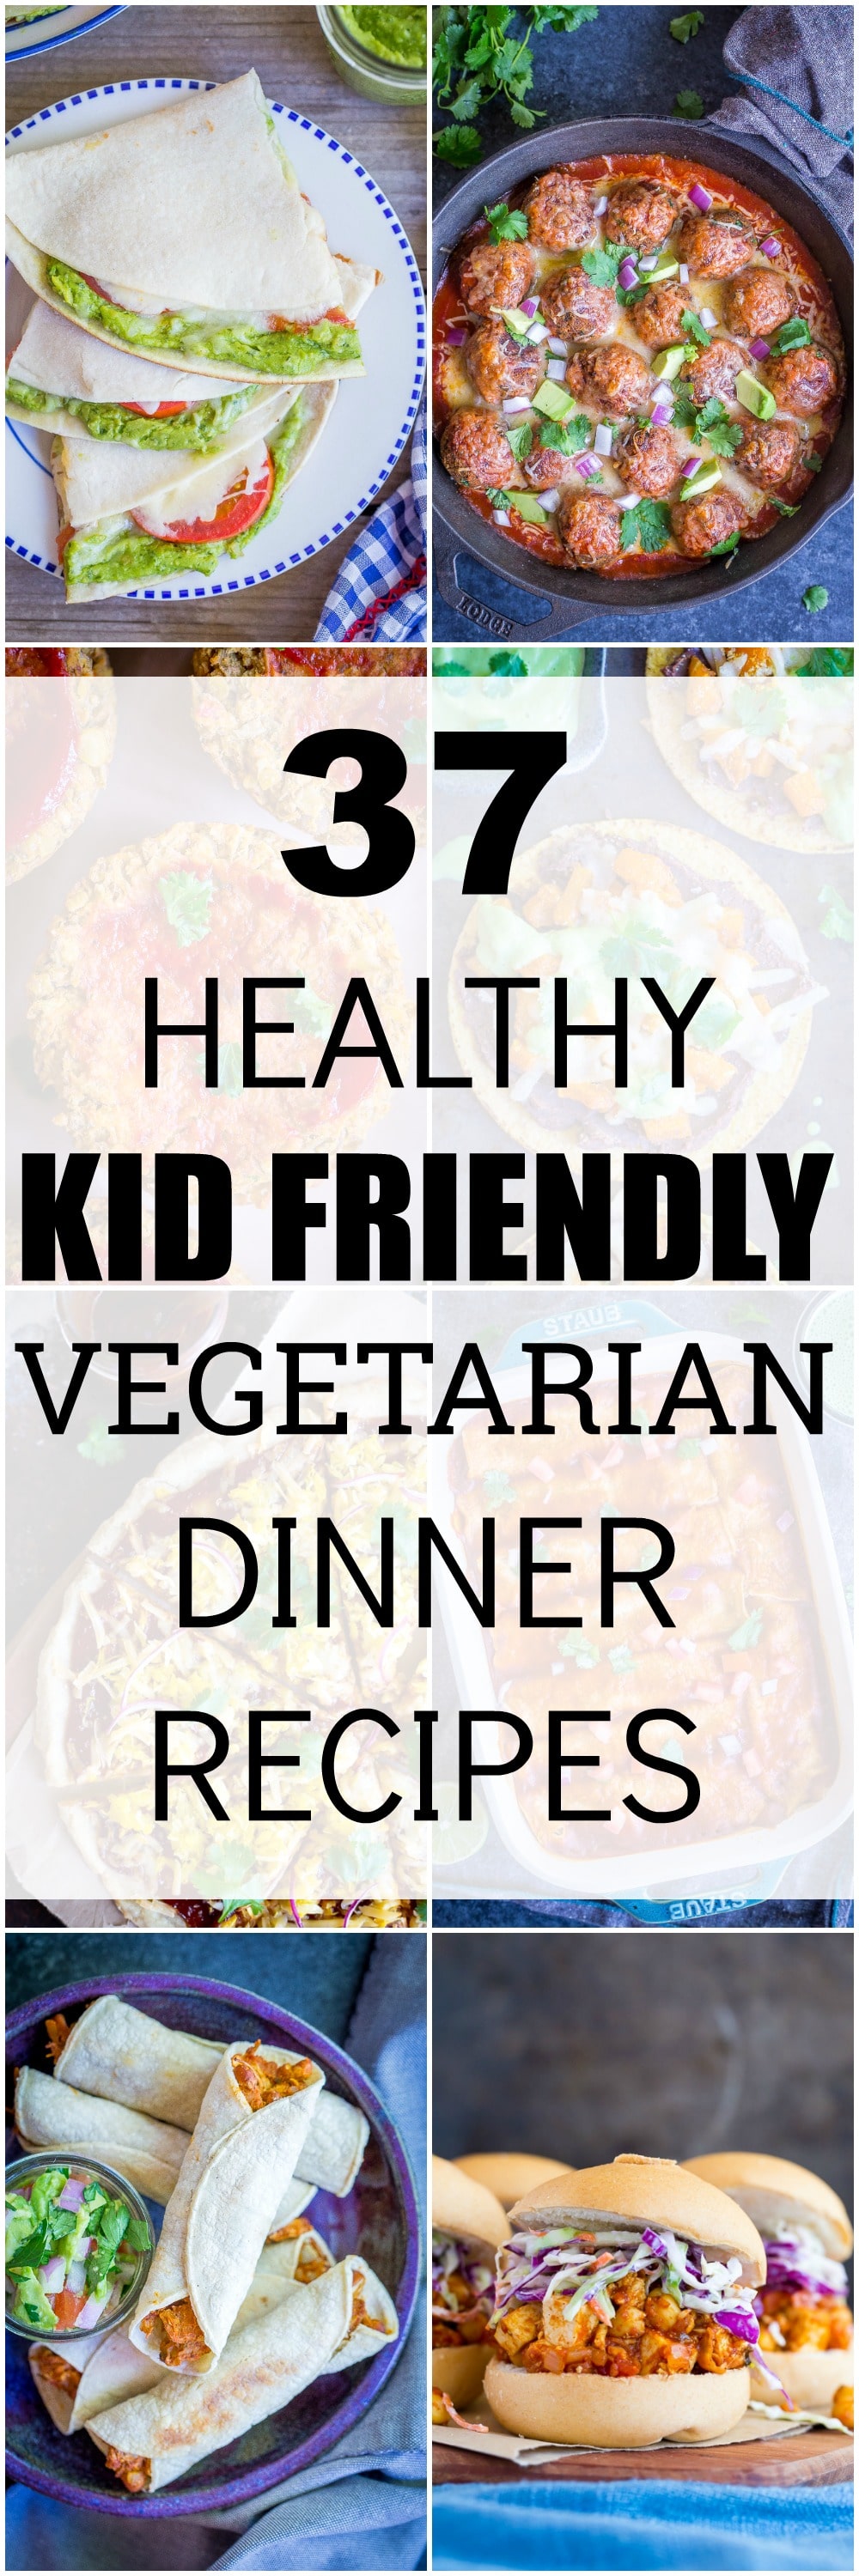 37 Healthy Kid Friendly Vegetarian Dinner Recipes - She Likes Food